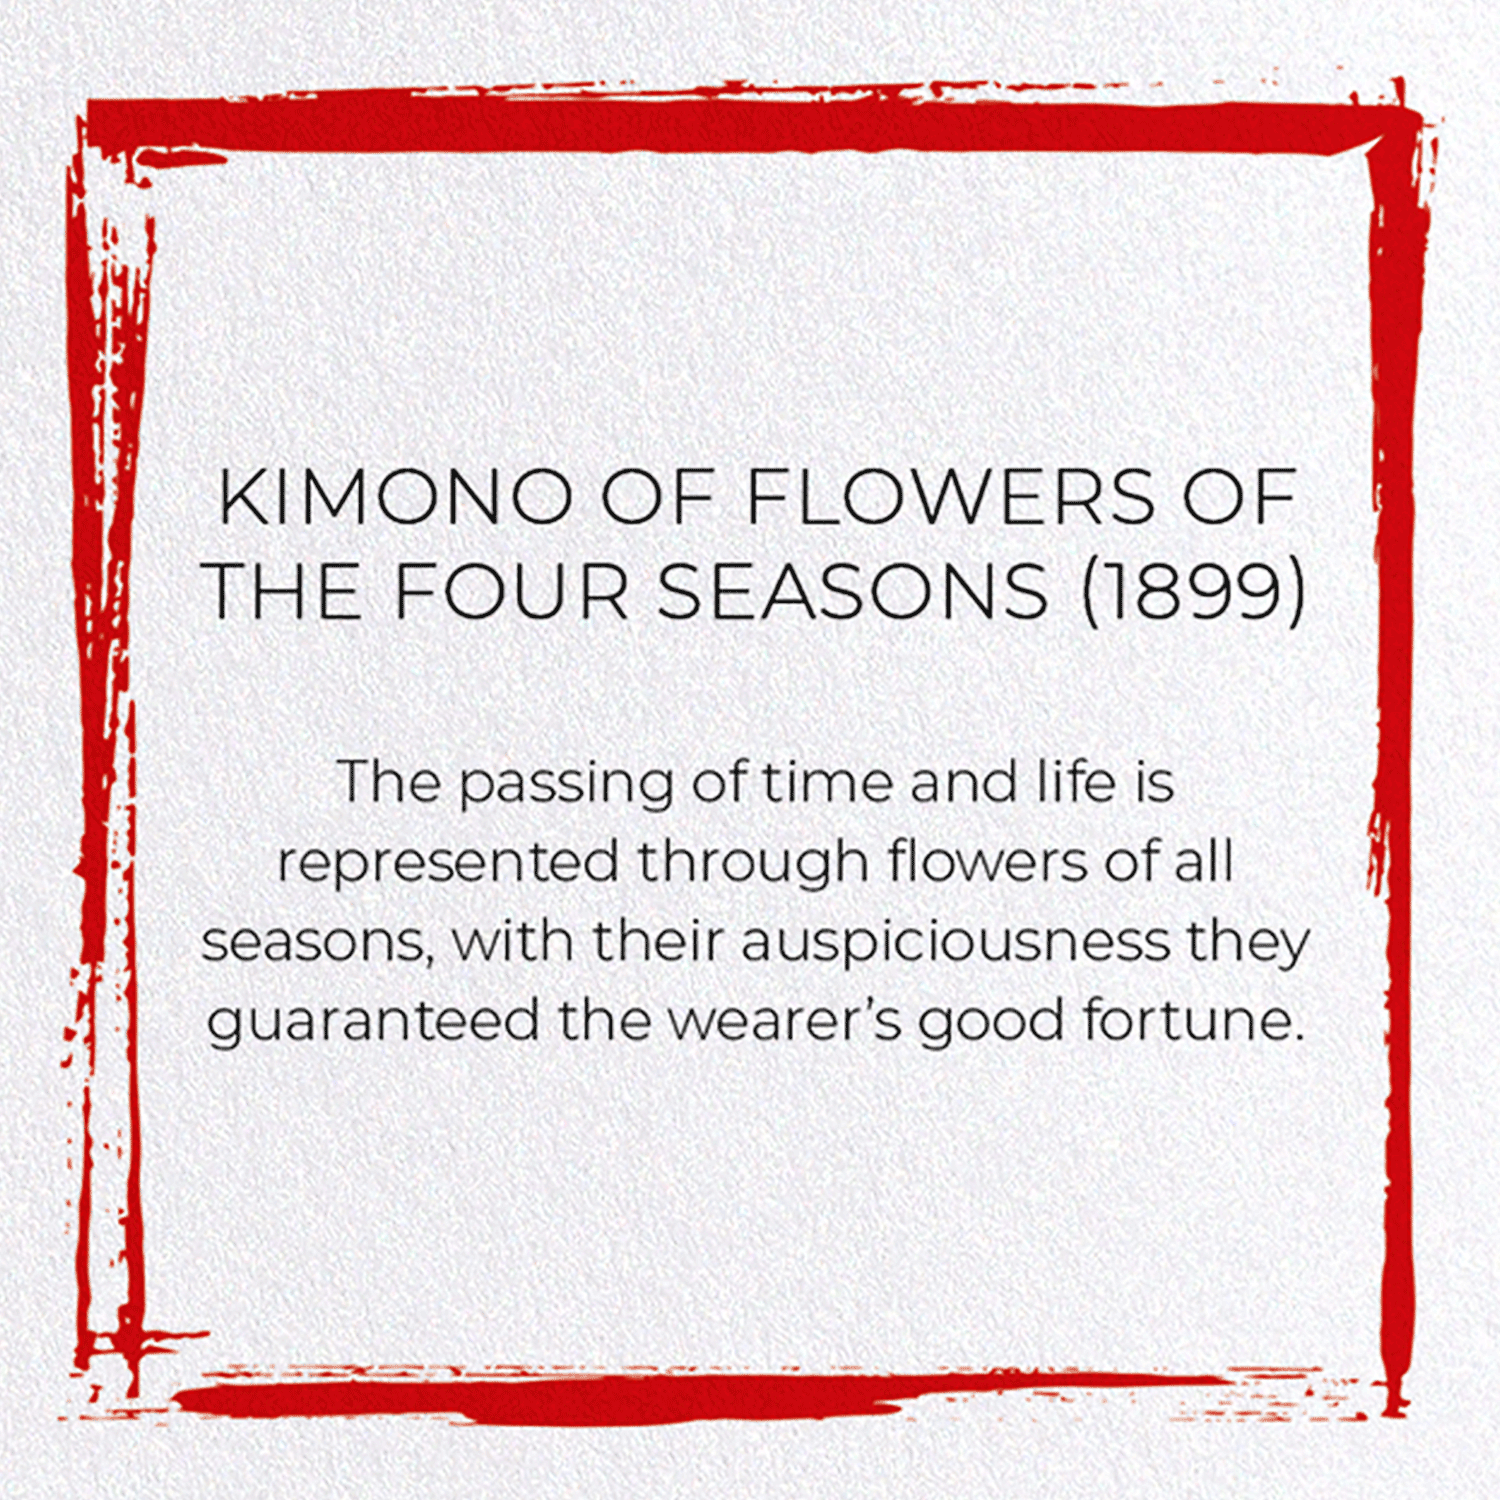 KIMONO OF FLOWERS OF THE FOUR SEASONS (1899)